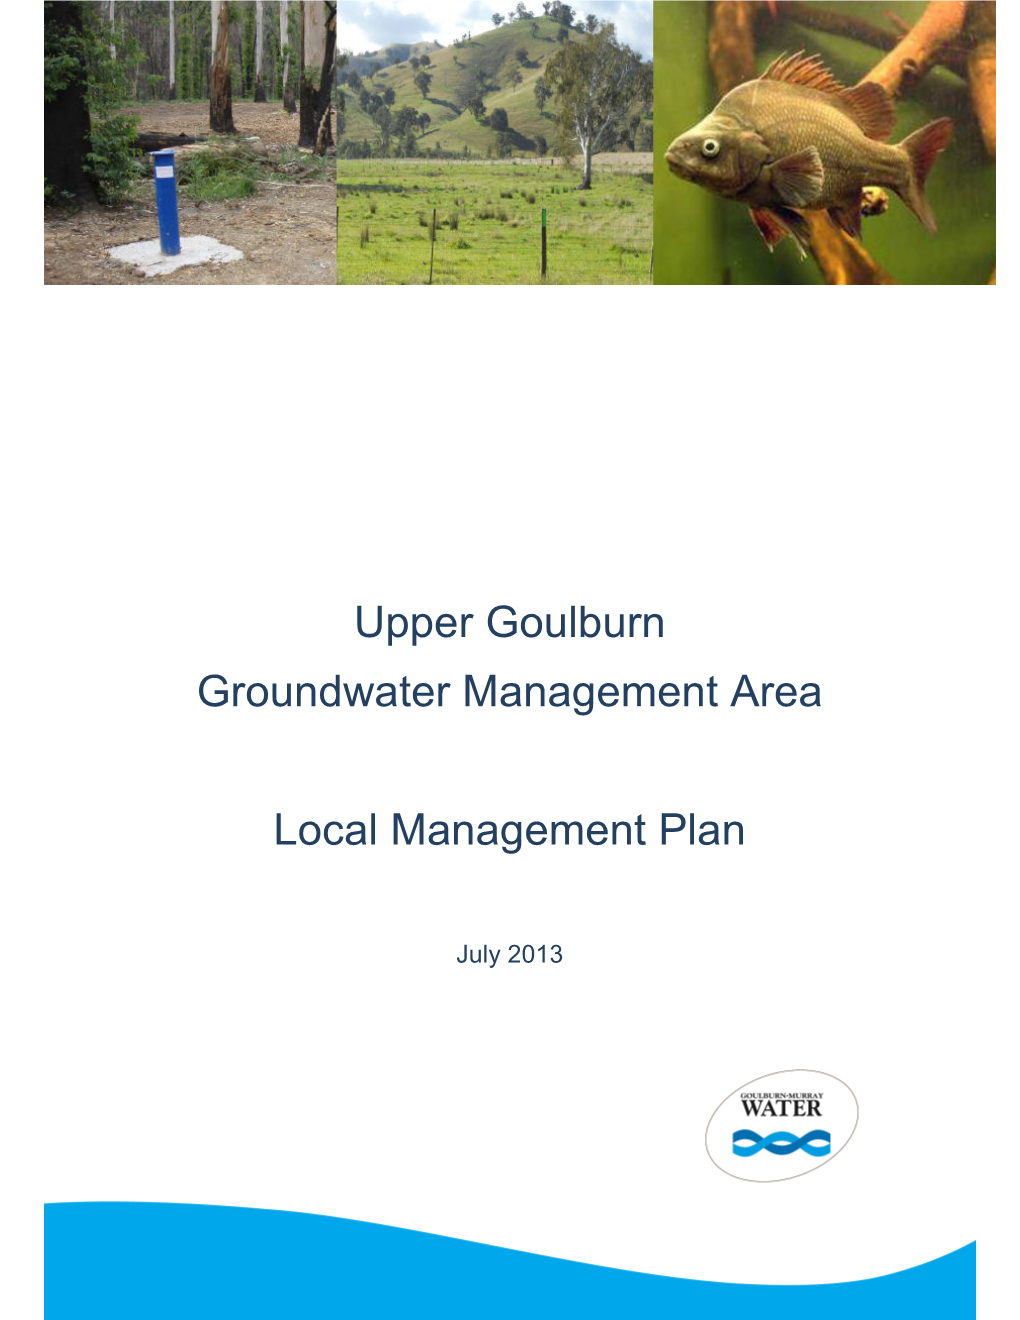 Upper Goulburn Groundwater Management Area Local Management Plan